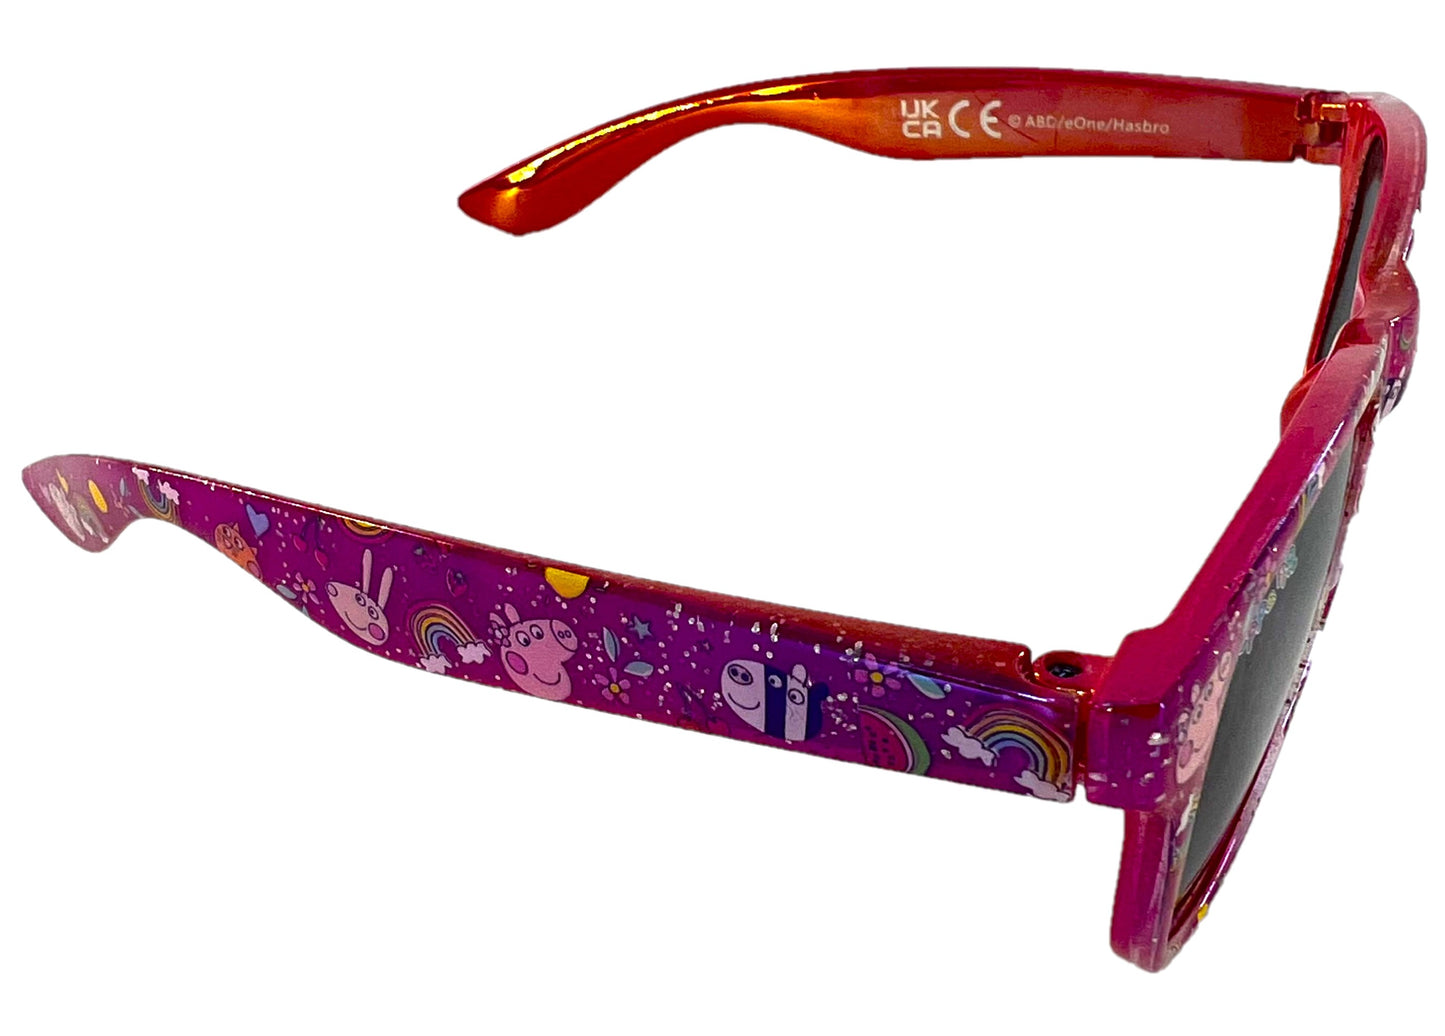 Peppa Pig Sunglasses & Beanie Hat Summer Set 100% UV Protection